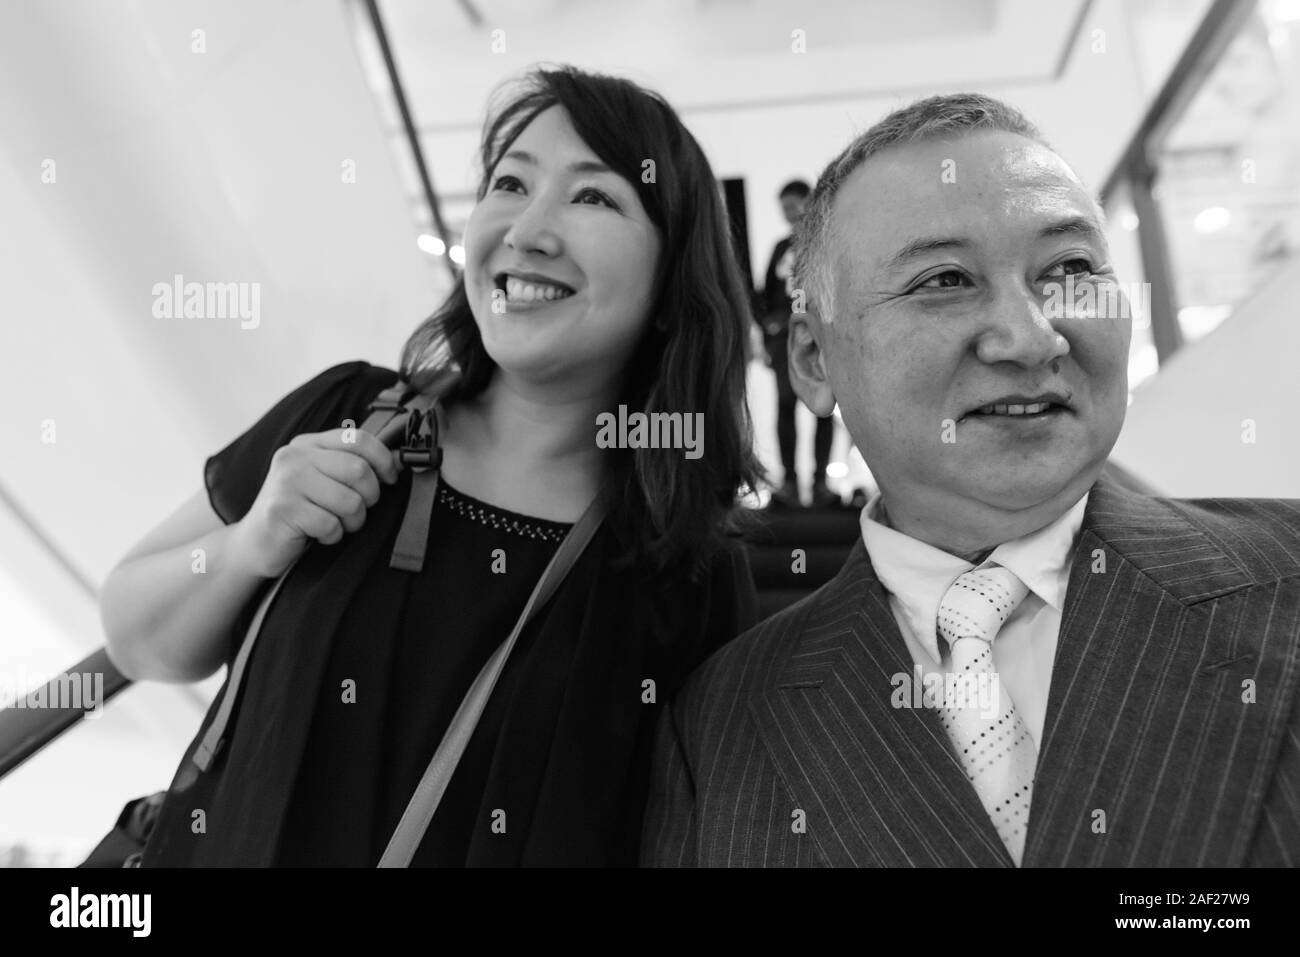 Mature Asian businessman and mature Asian woman exploring the city together Stock Photo